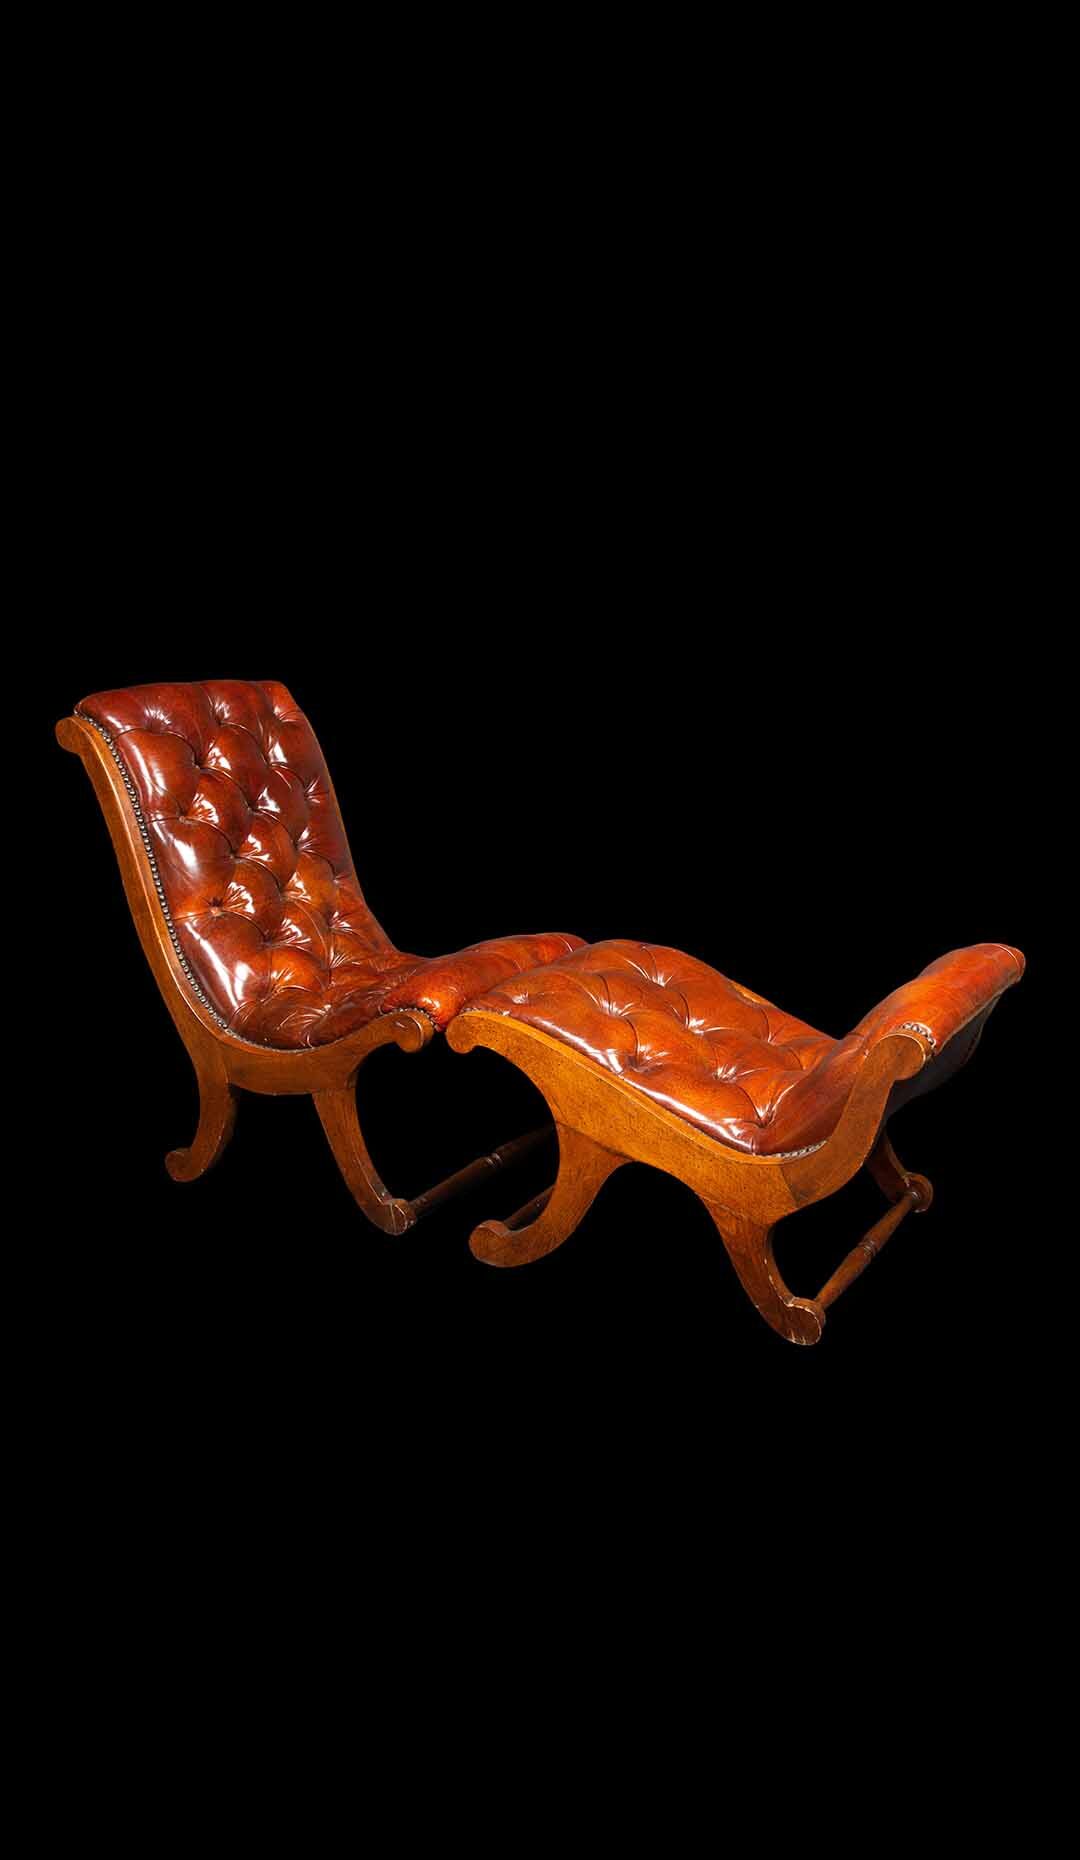 Georgian Style Tufted Leather Chair & Ottoman